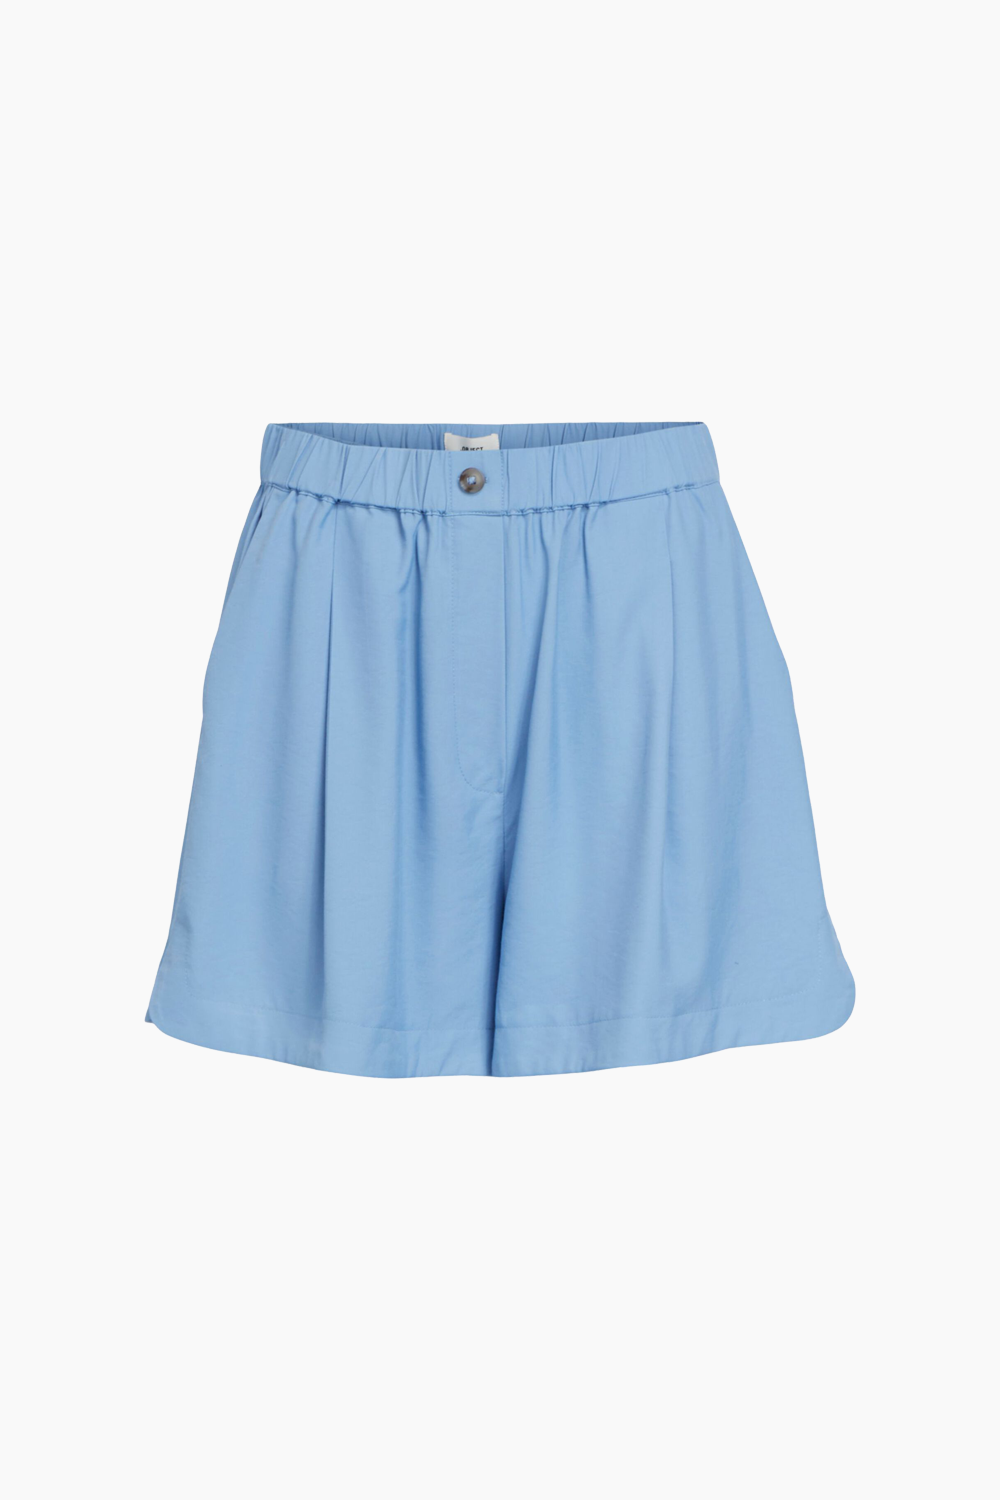 Objlagan HW Shorts - Provence - Object - Blå S